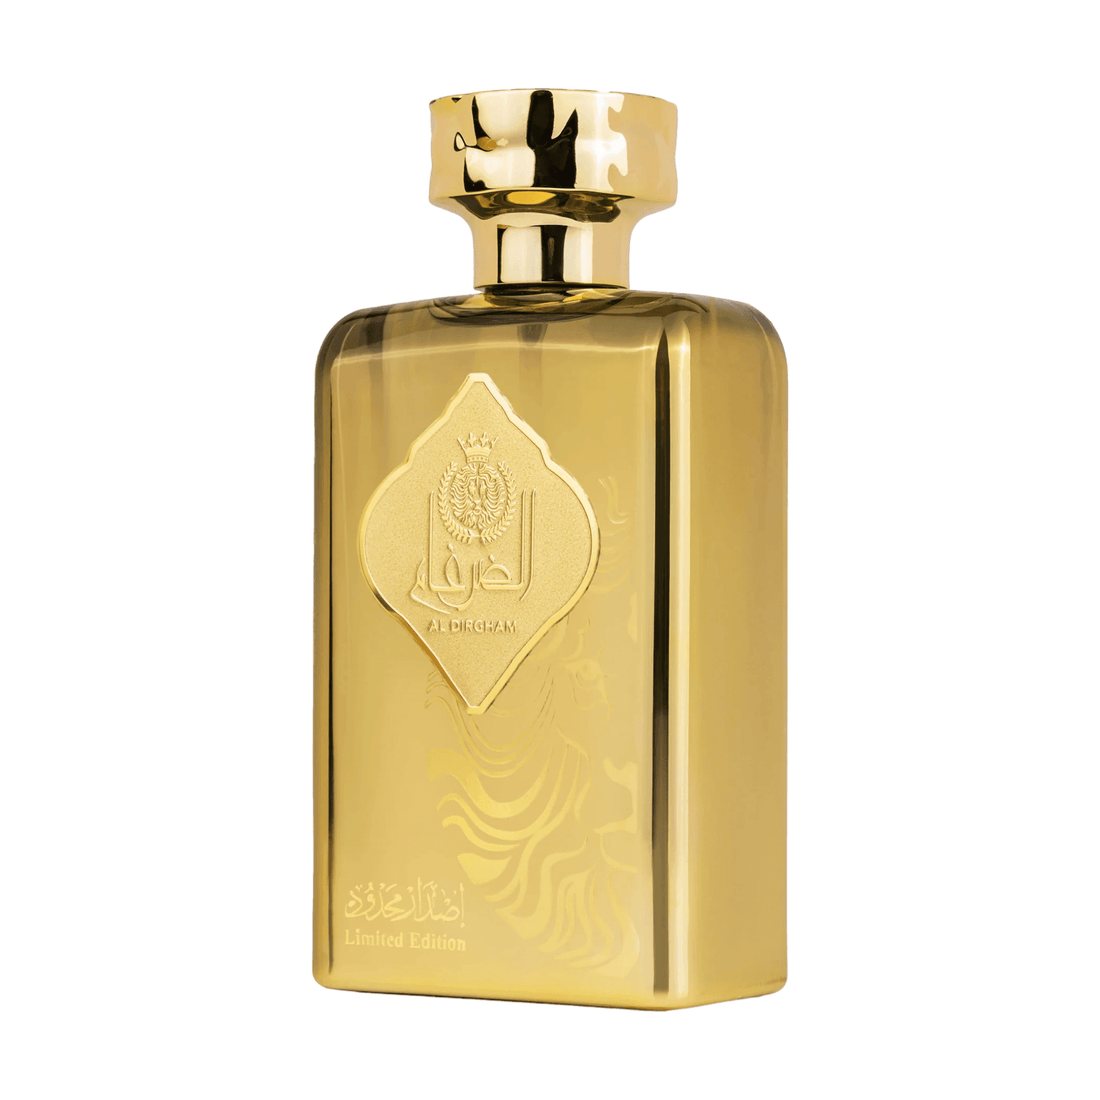 Luxury 100ml bottle of Al Dirgham Limited Edition Perfume by Ard Al Zaafaran, showcasing its exotic fruit and floral essence.